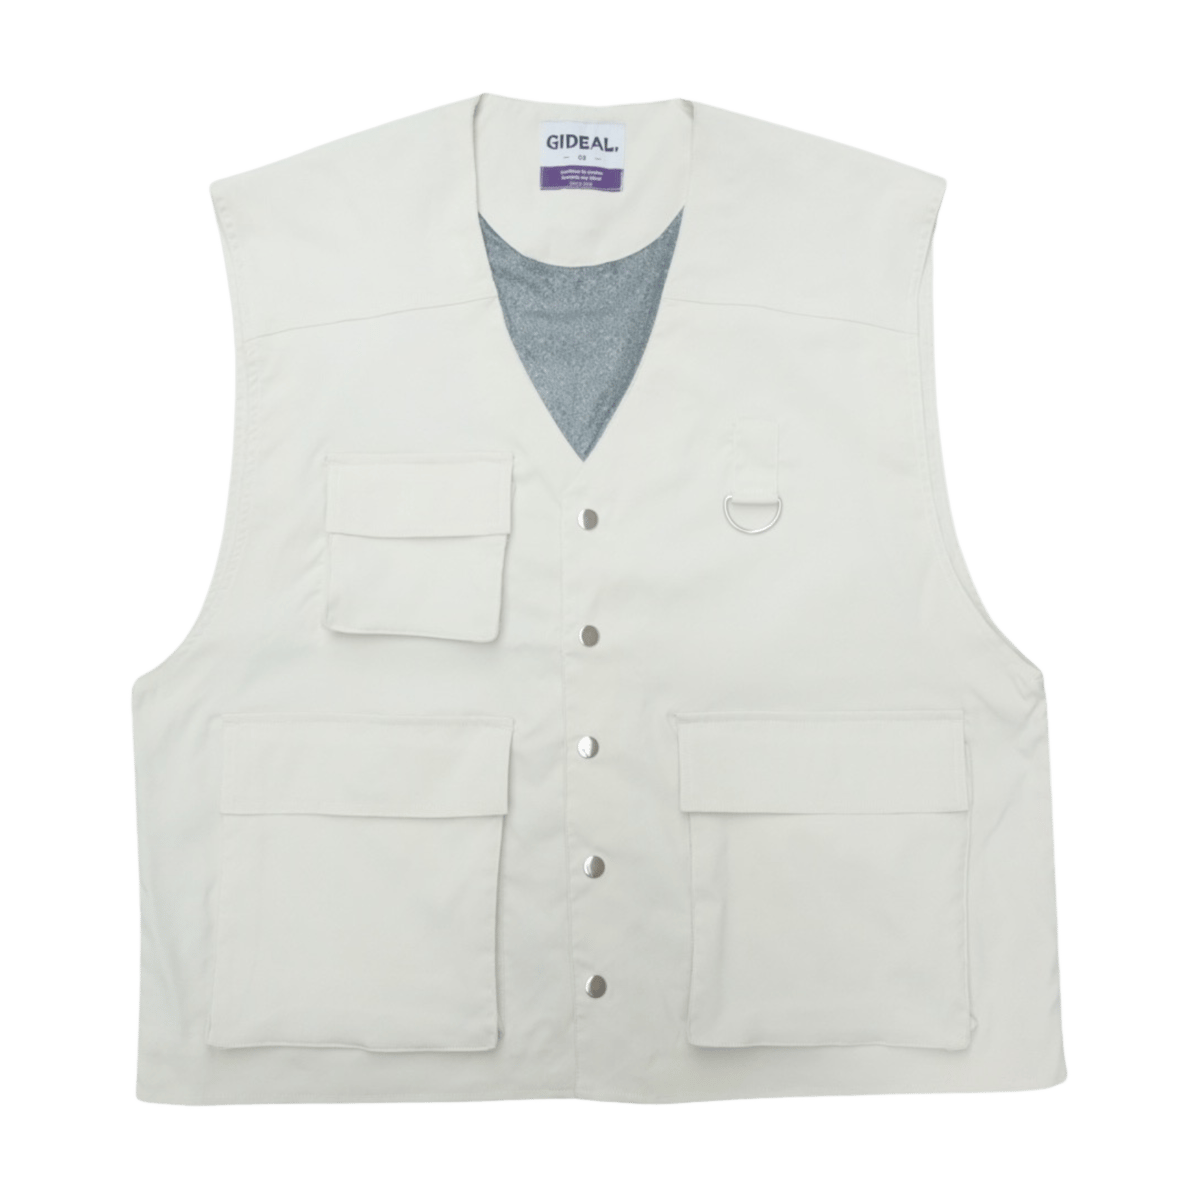 4pocket utility vest【off white】